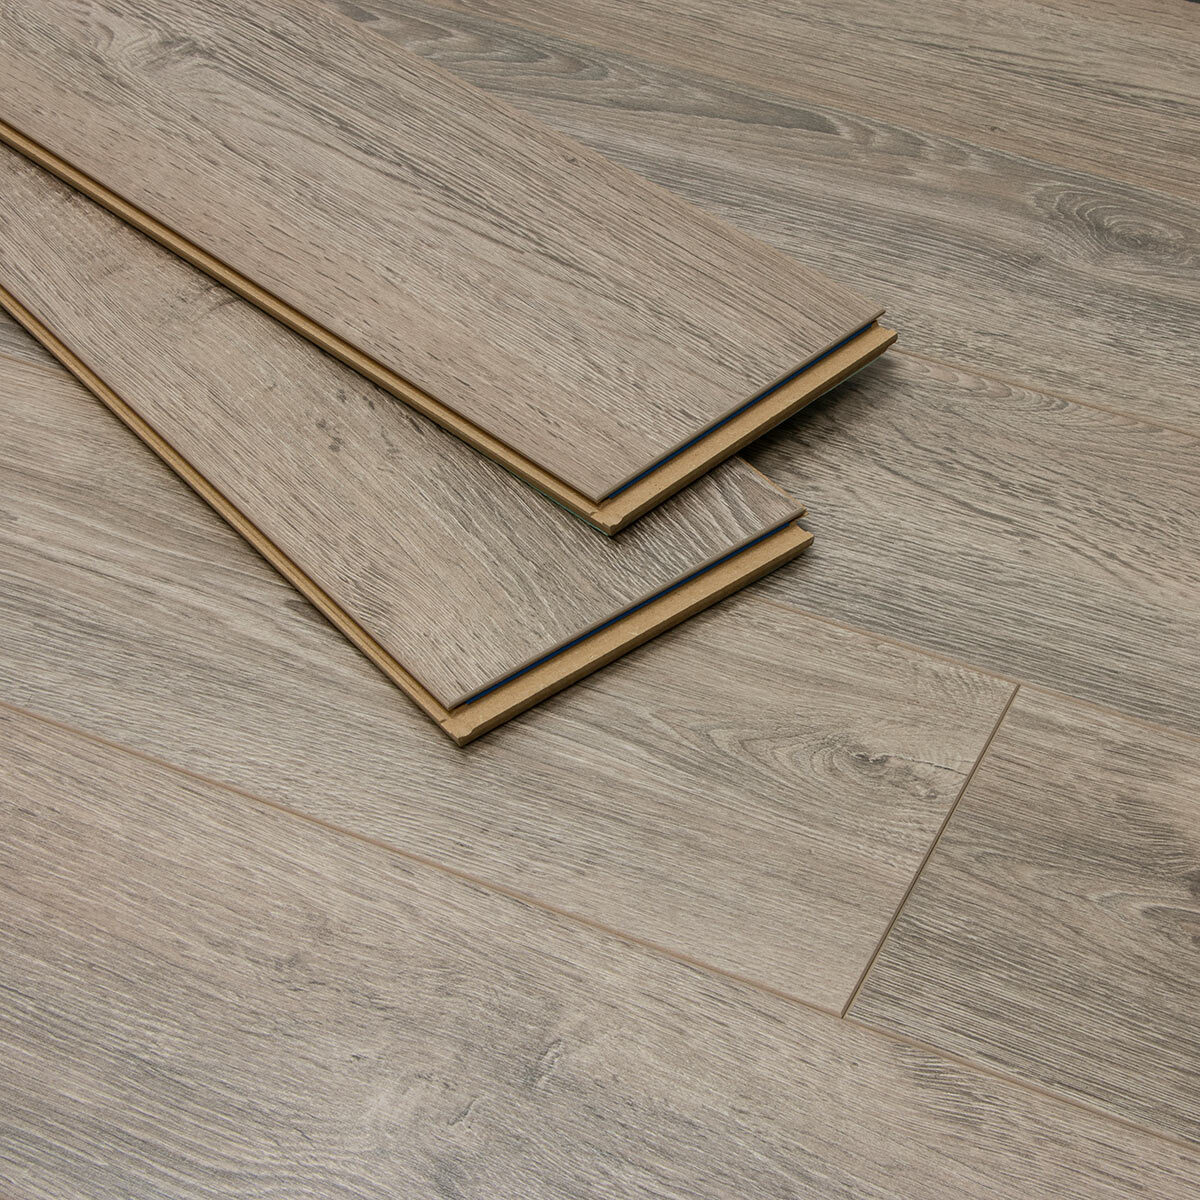 Ac5 Laminate Flooring, Costco Laminate Flooring Reviews Uk